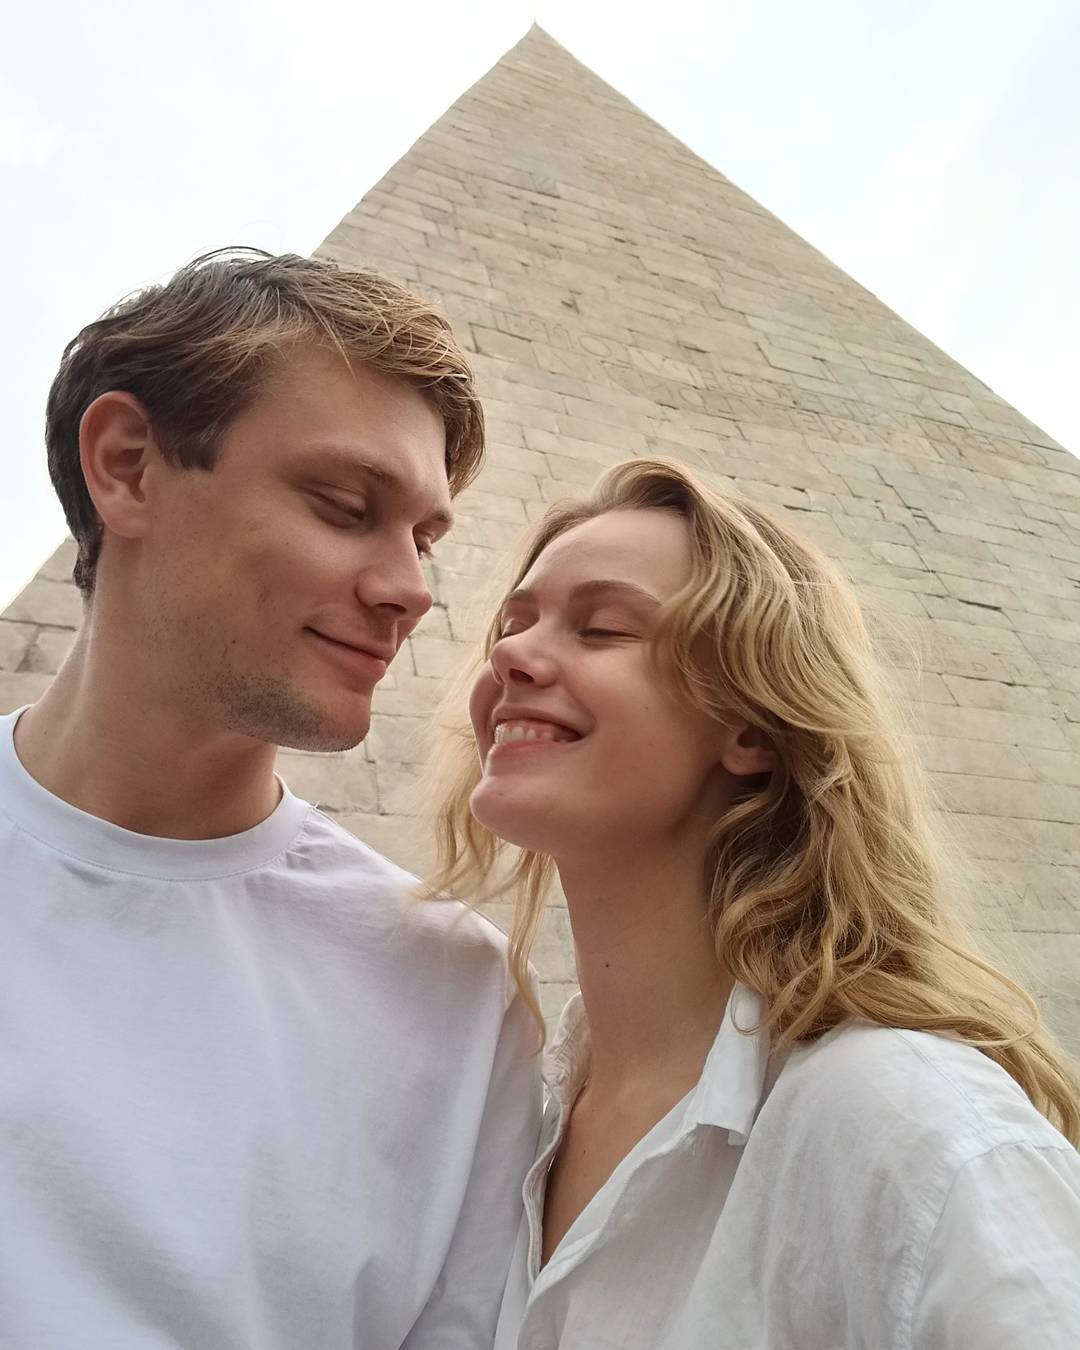 Frida Gustavsson with her future husband Marcel Engdahl at Piramide Cestia